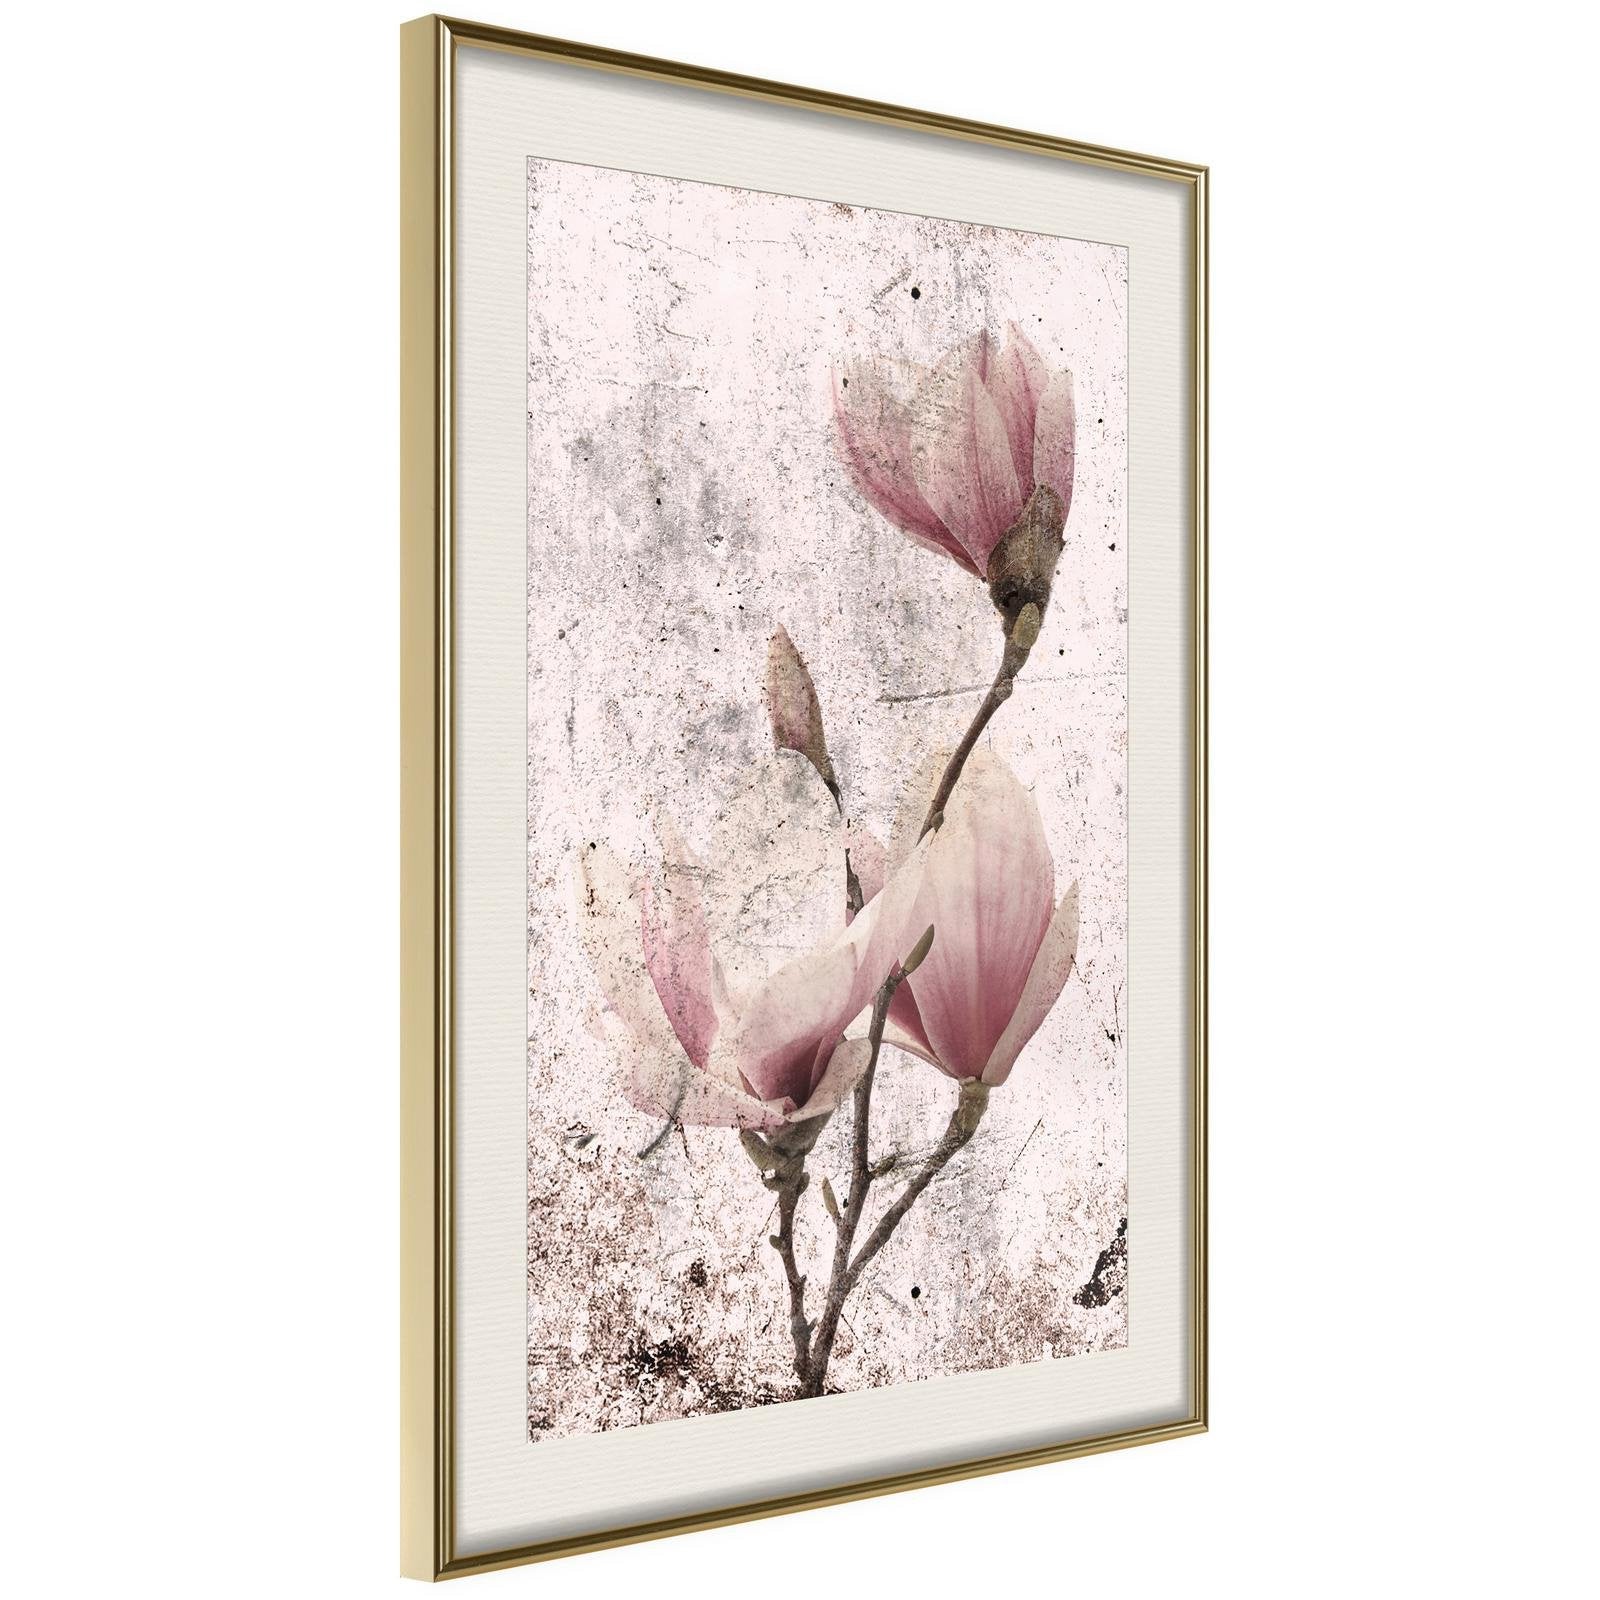 Inramad Poster / Tavla - Queen of Spring Flowers II - 20x30 Svart ram